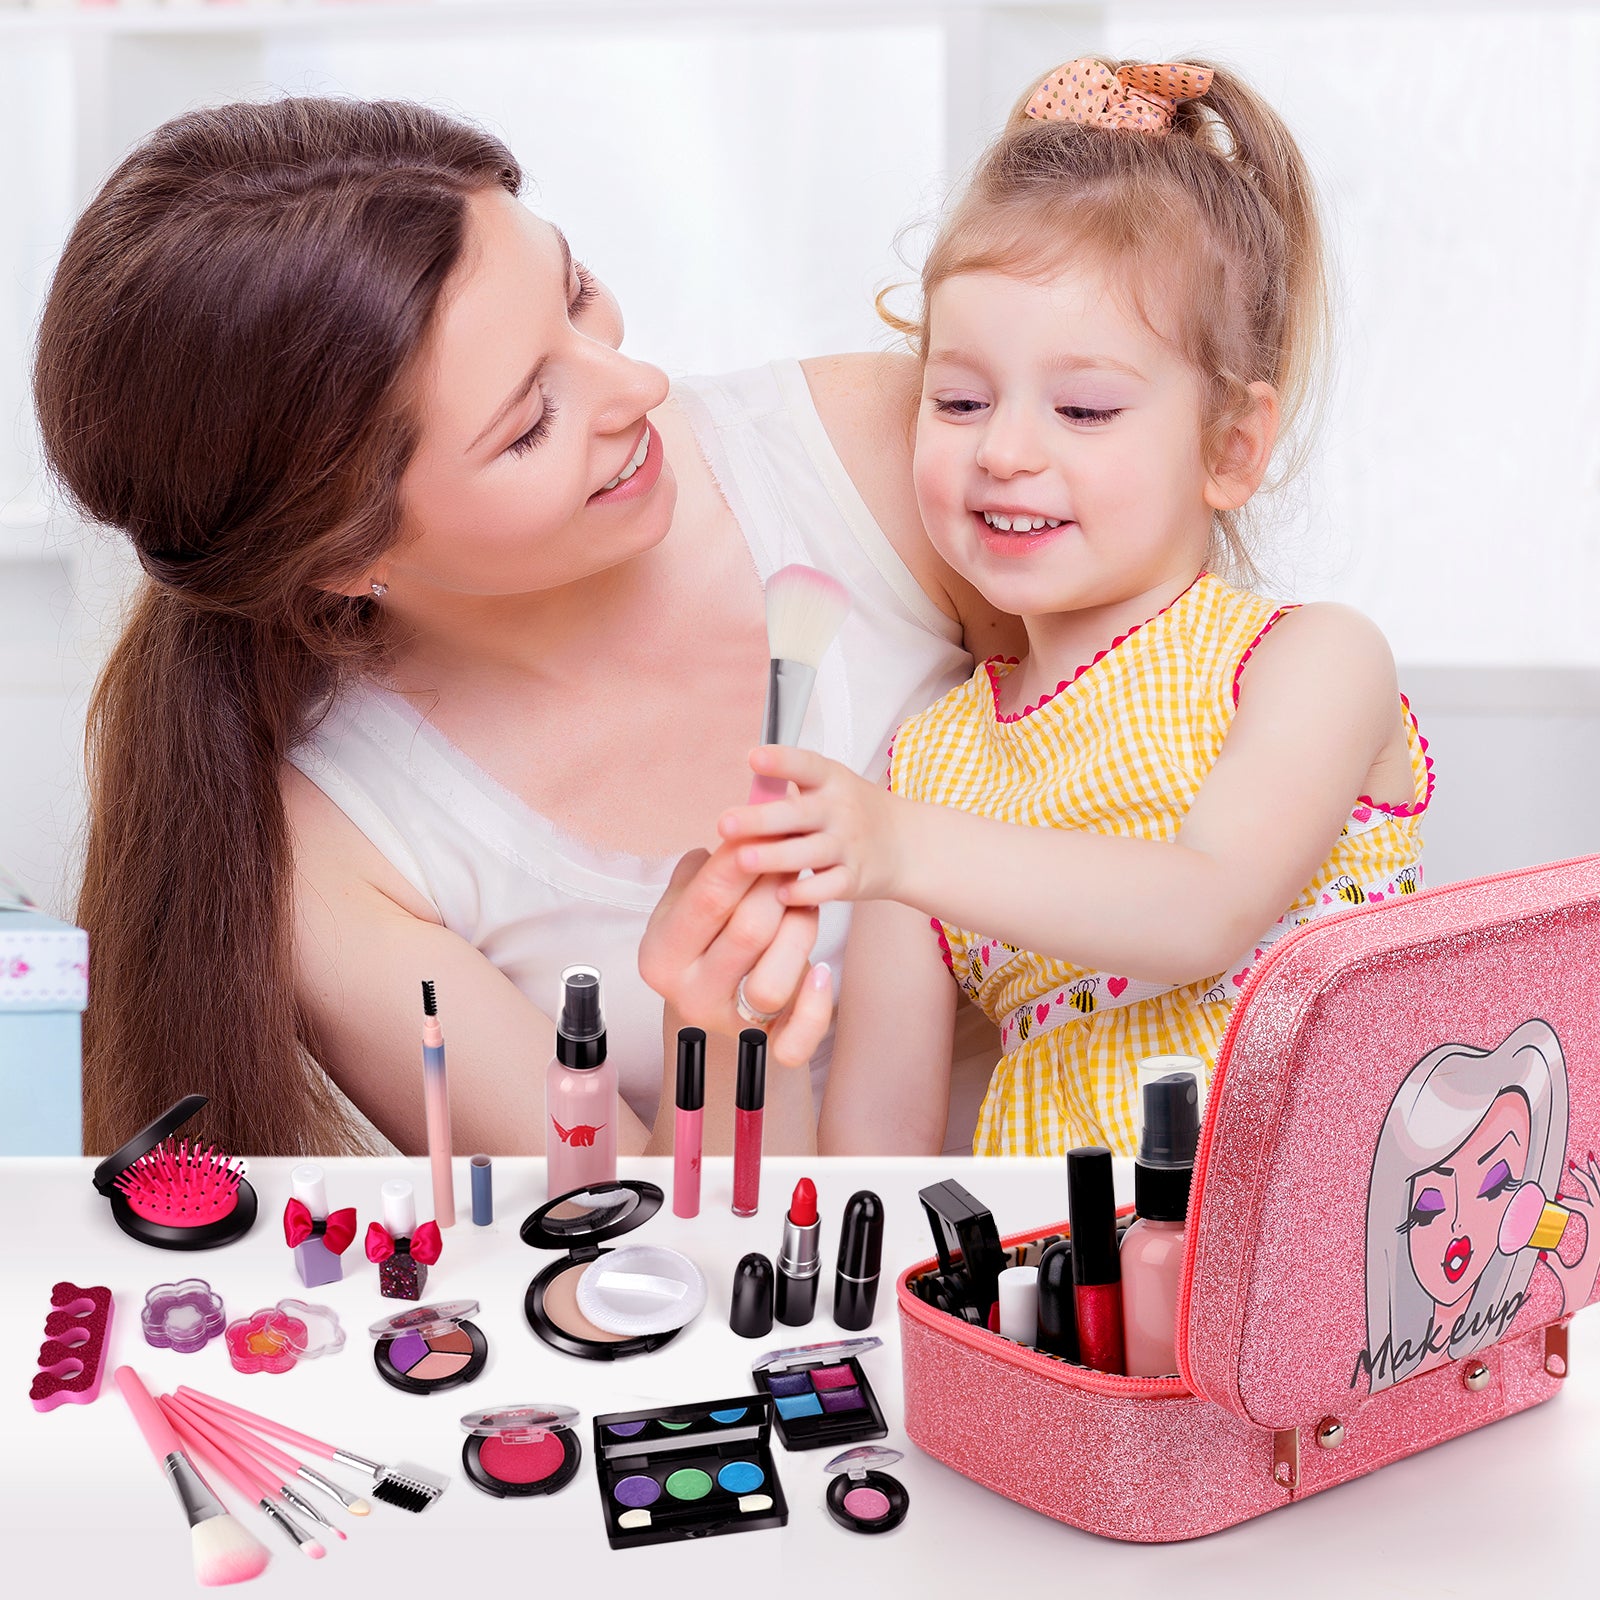 Kids Washable Makeup Girls Toys - Girls Makeup Kit for Kids Make